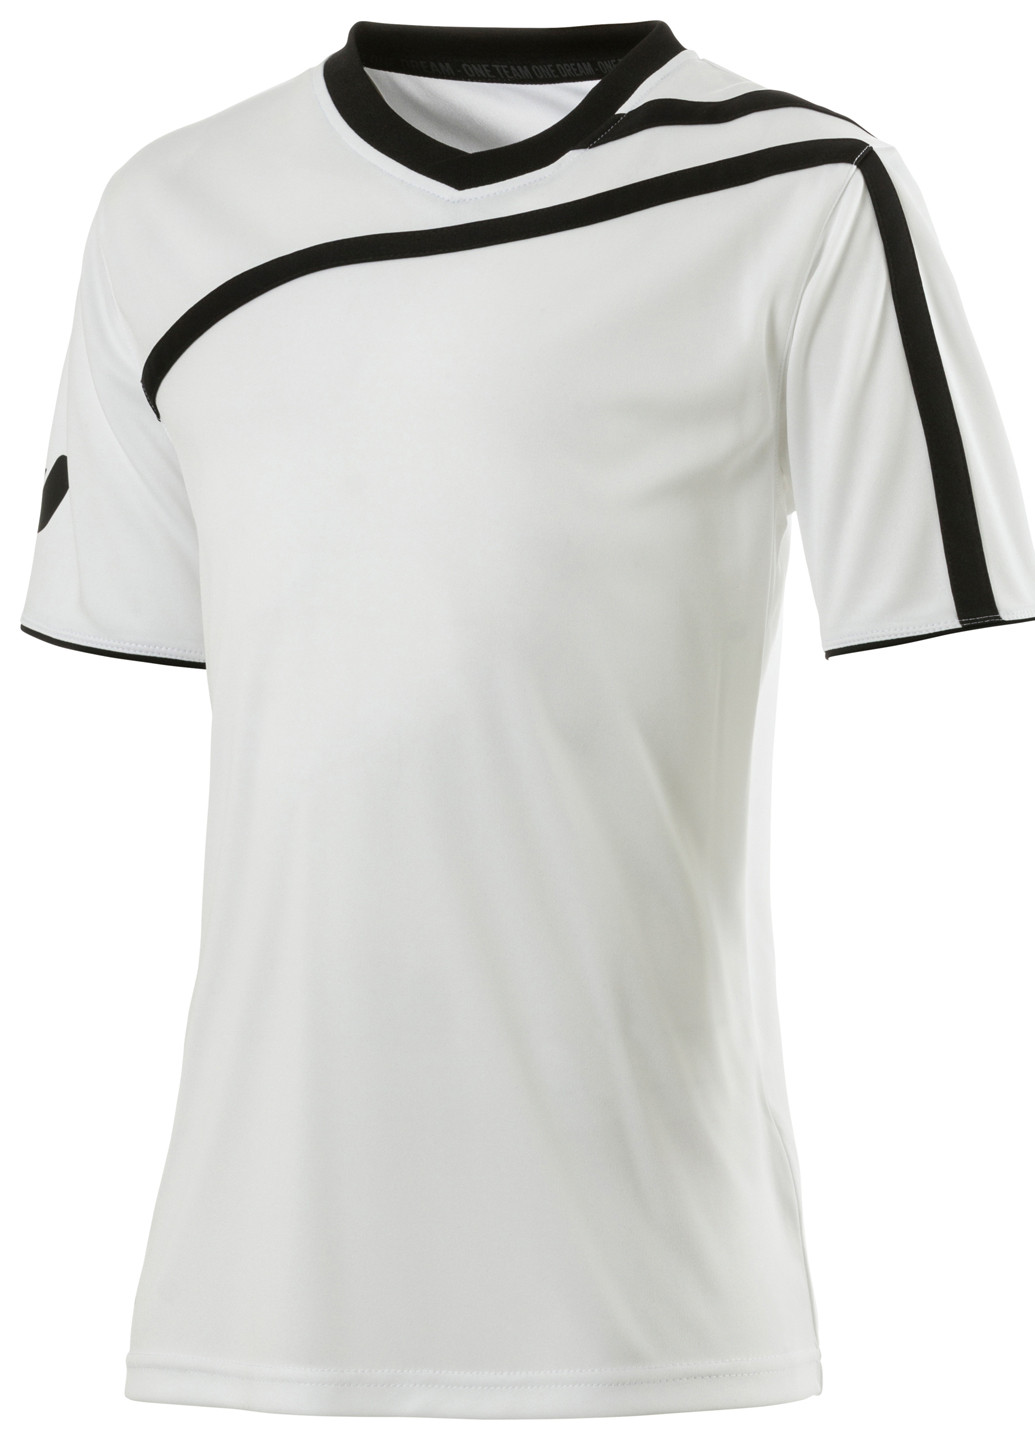 Белая летняя футболка с коротким рукавом Pro Touch